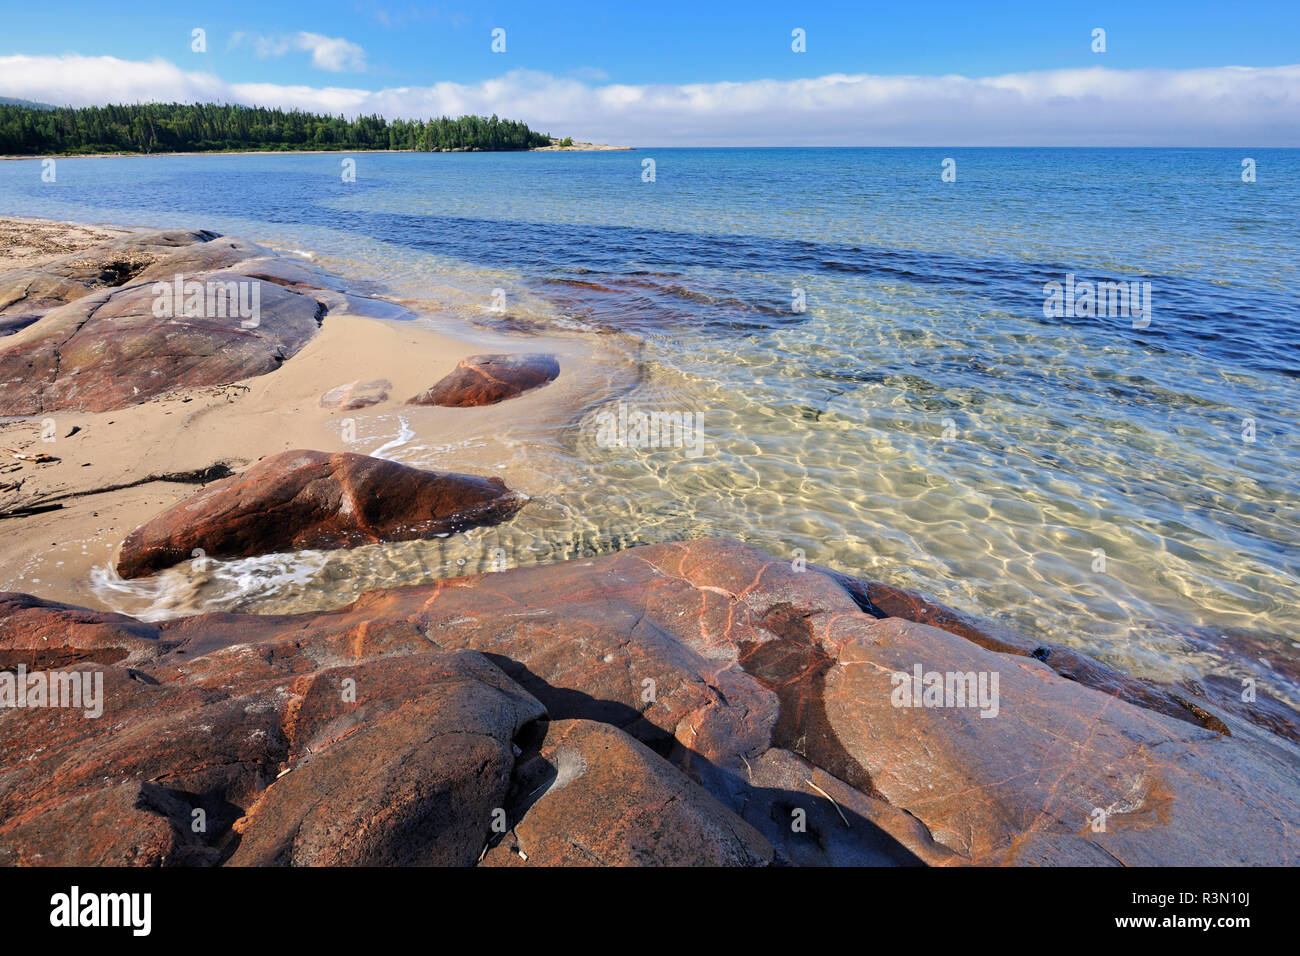 Canada, Ontario, Neys Provincial Park. Rocky shoreline of Lake Superior at Prisoners Cove. Stock Photo